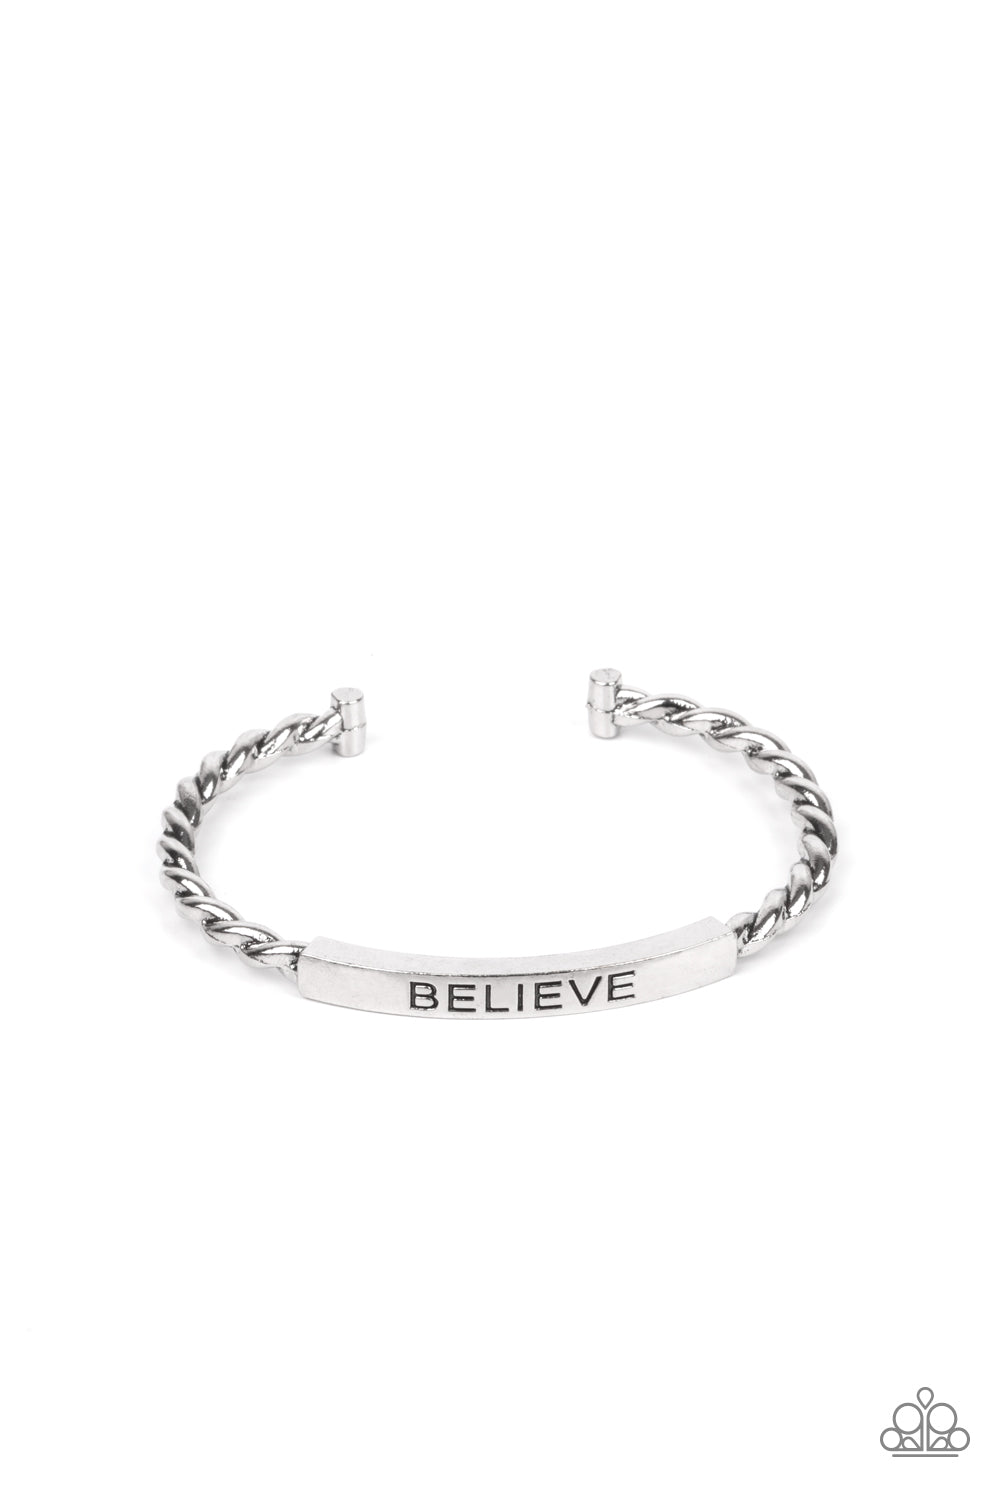 Paparazzi Bracelet - Keep Calm and Believe - Silver